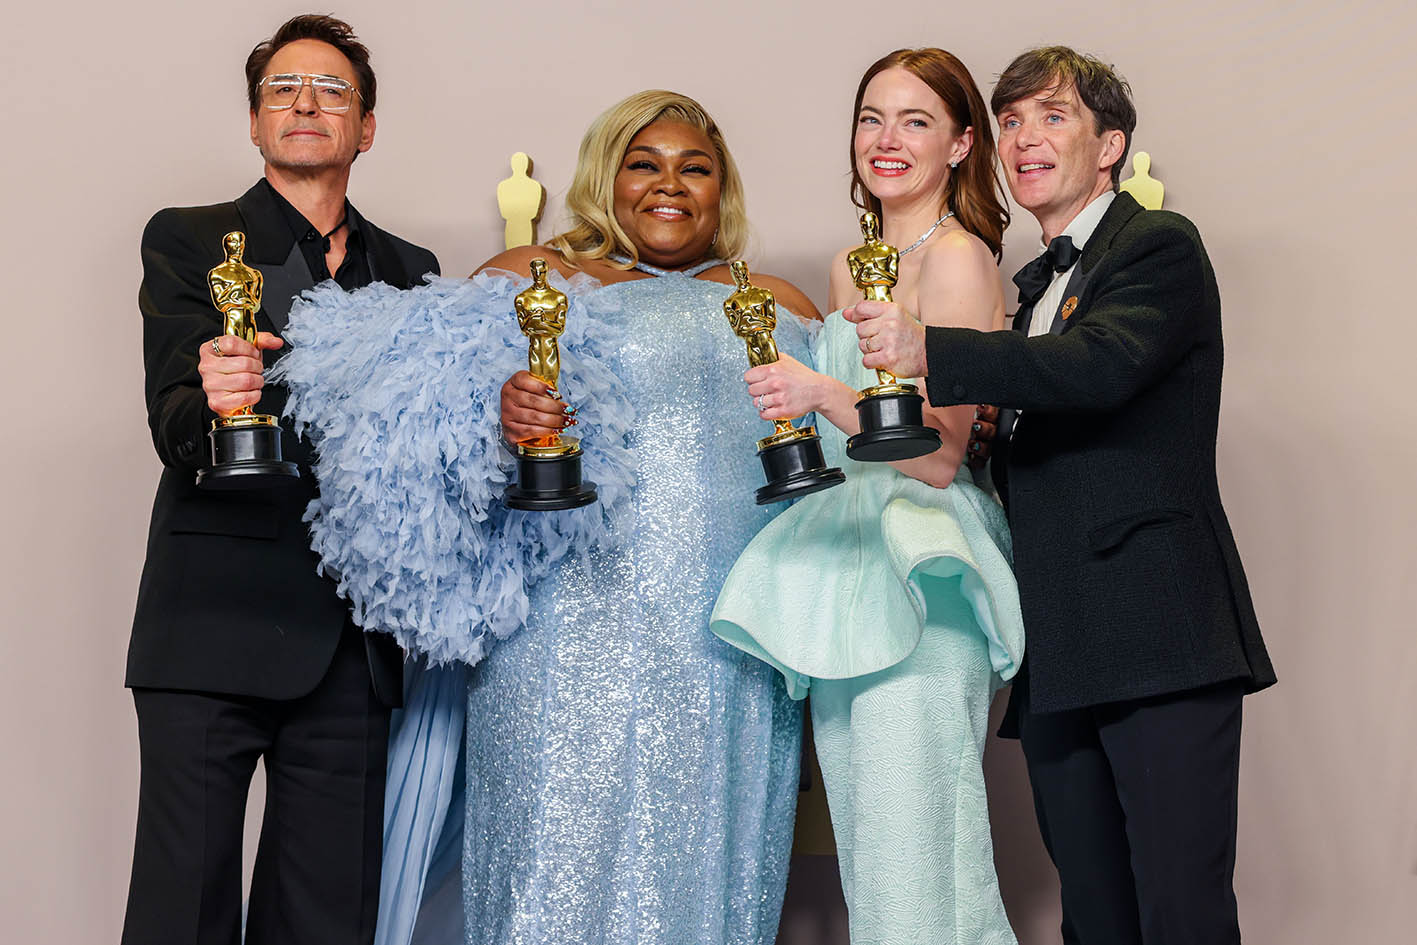 Oι βραβευμένοι με το βραβείο Όσκαρ Robert Downey Jr., Da'Vine Joy Randolph, Emma Stone και Cillian Murphy στη σκηνή για την πατροπαράδοτη φωτογραφία, στις 10 Μαρτίου 2024.